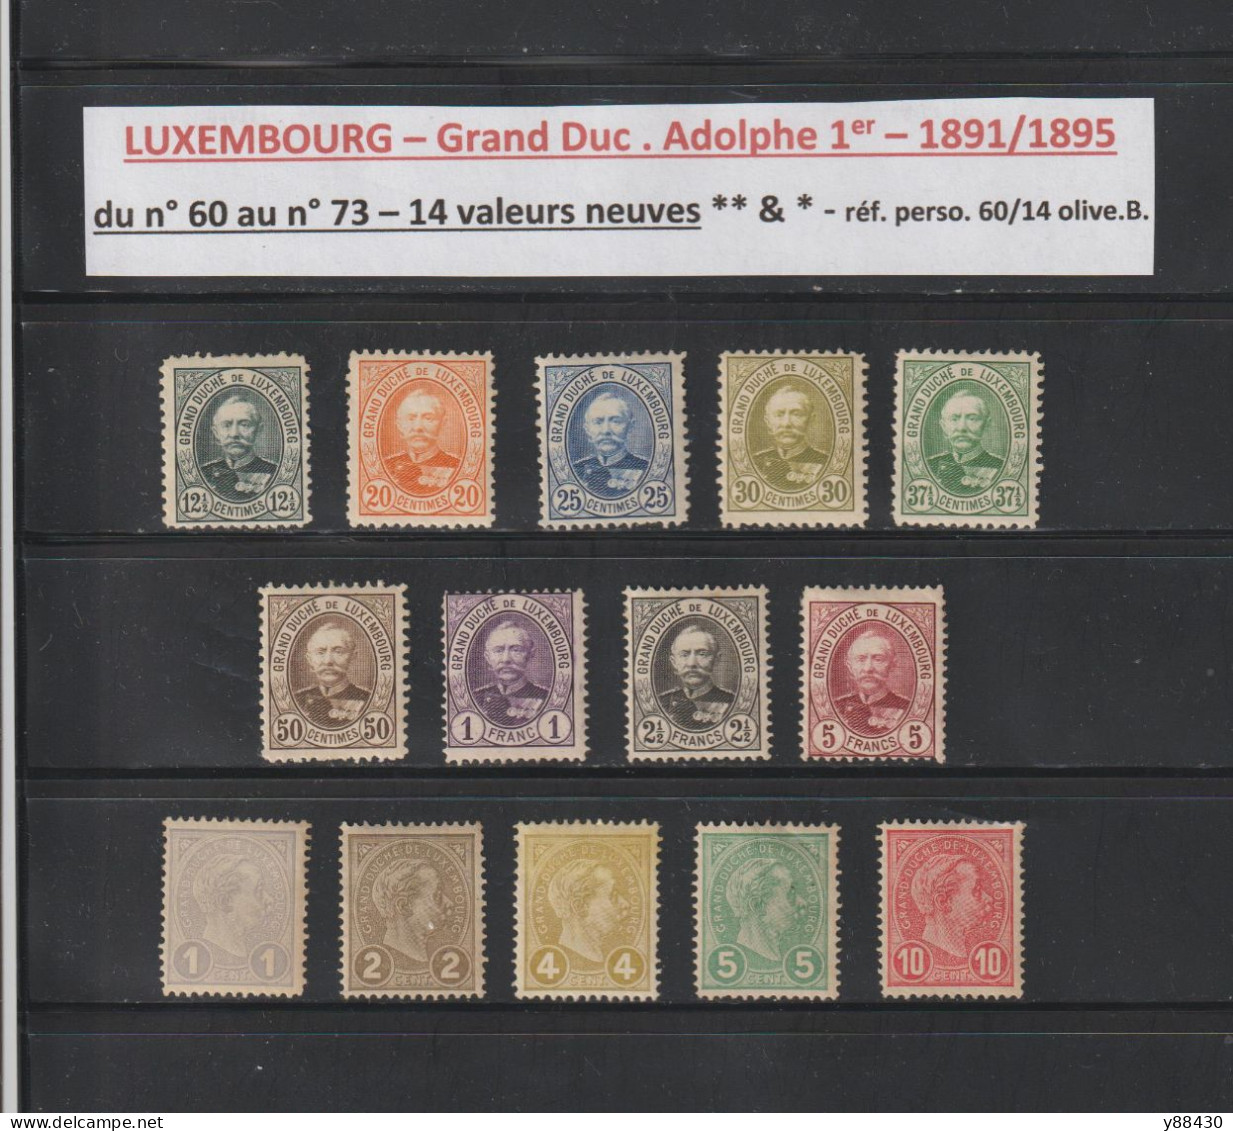 LUXEMBOURG - 60 à 73 De 1891/1895 - Neuf ** & *  -  14 Valeurs - Grand Duc Adolphe 1er - Face Et Profil - 2 Scan - 1891 Adolfo Di Fronte